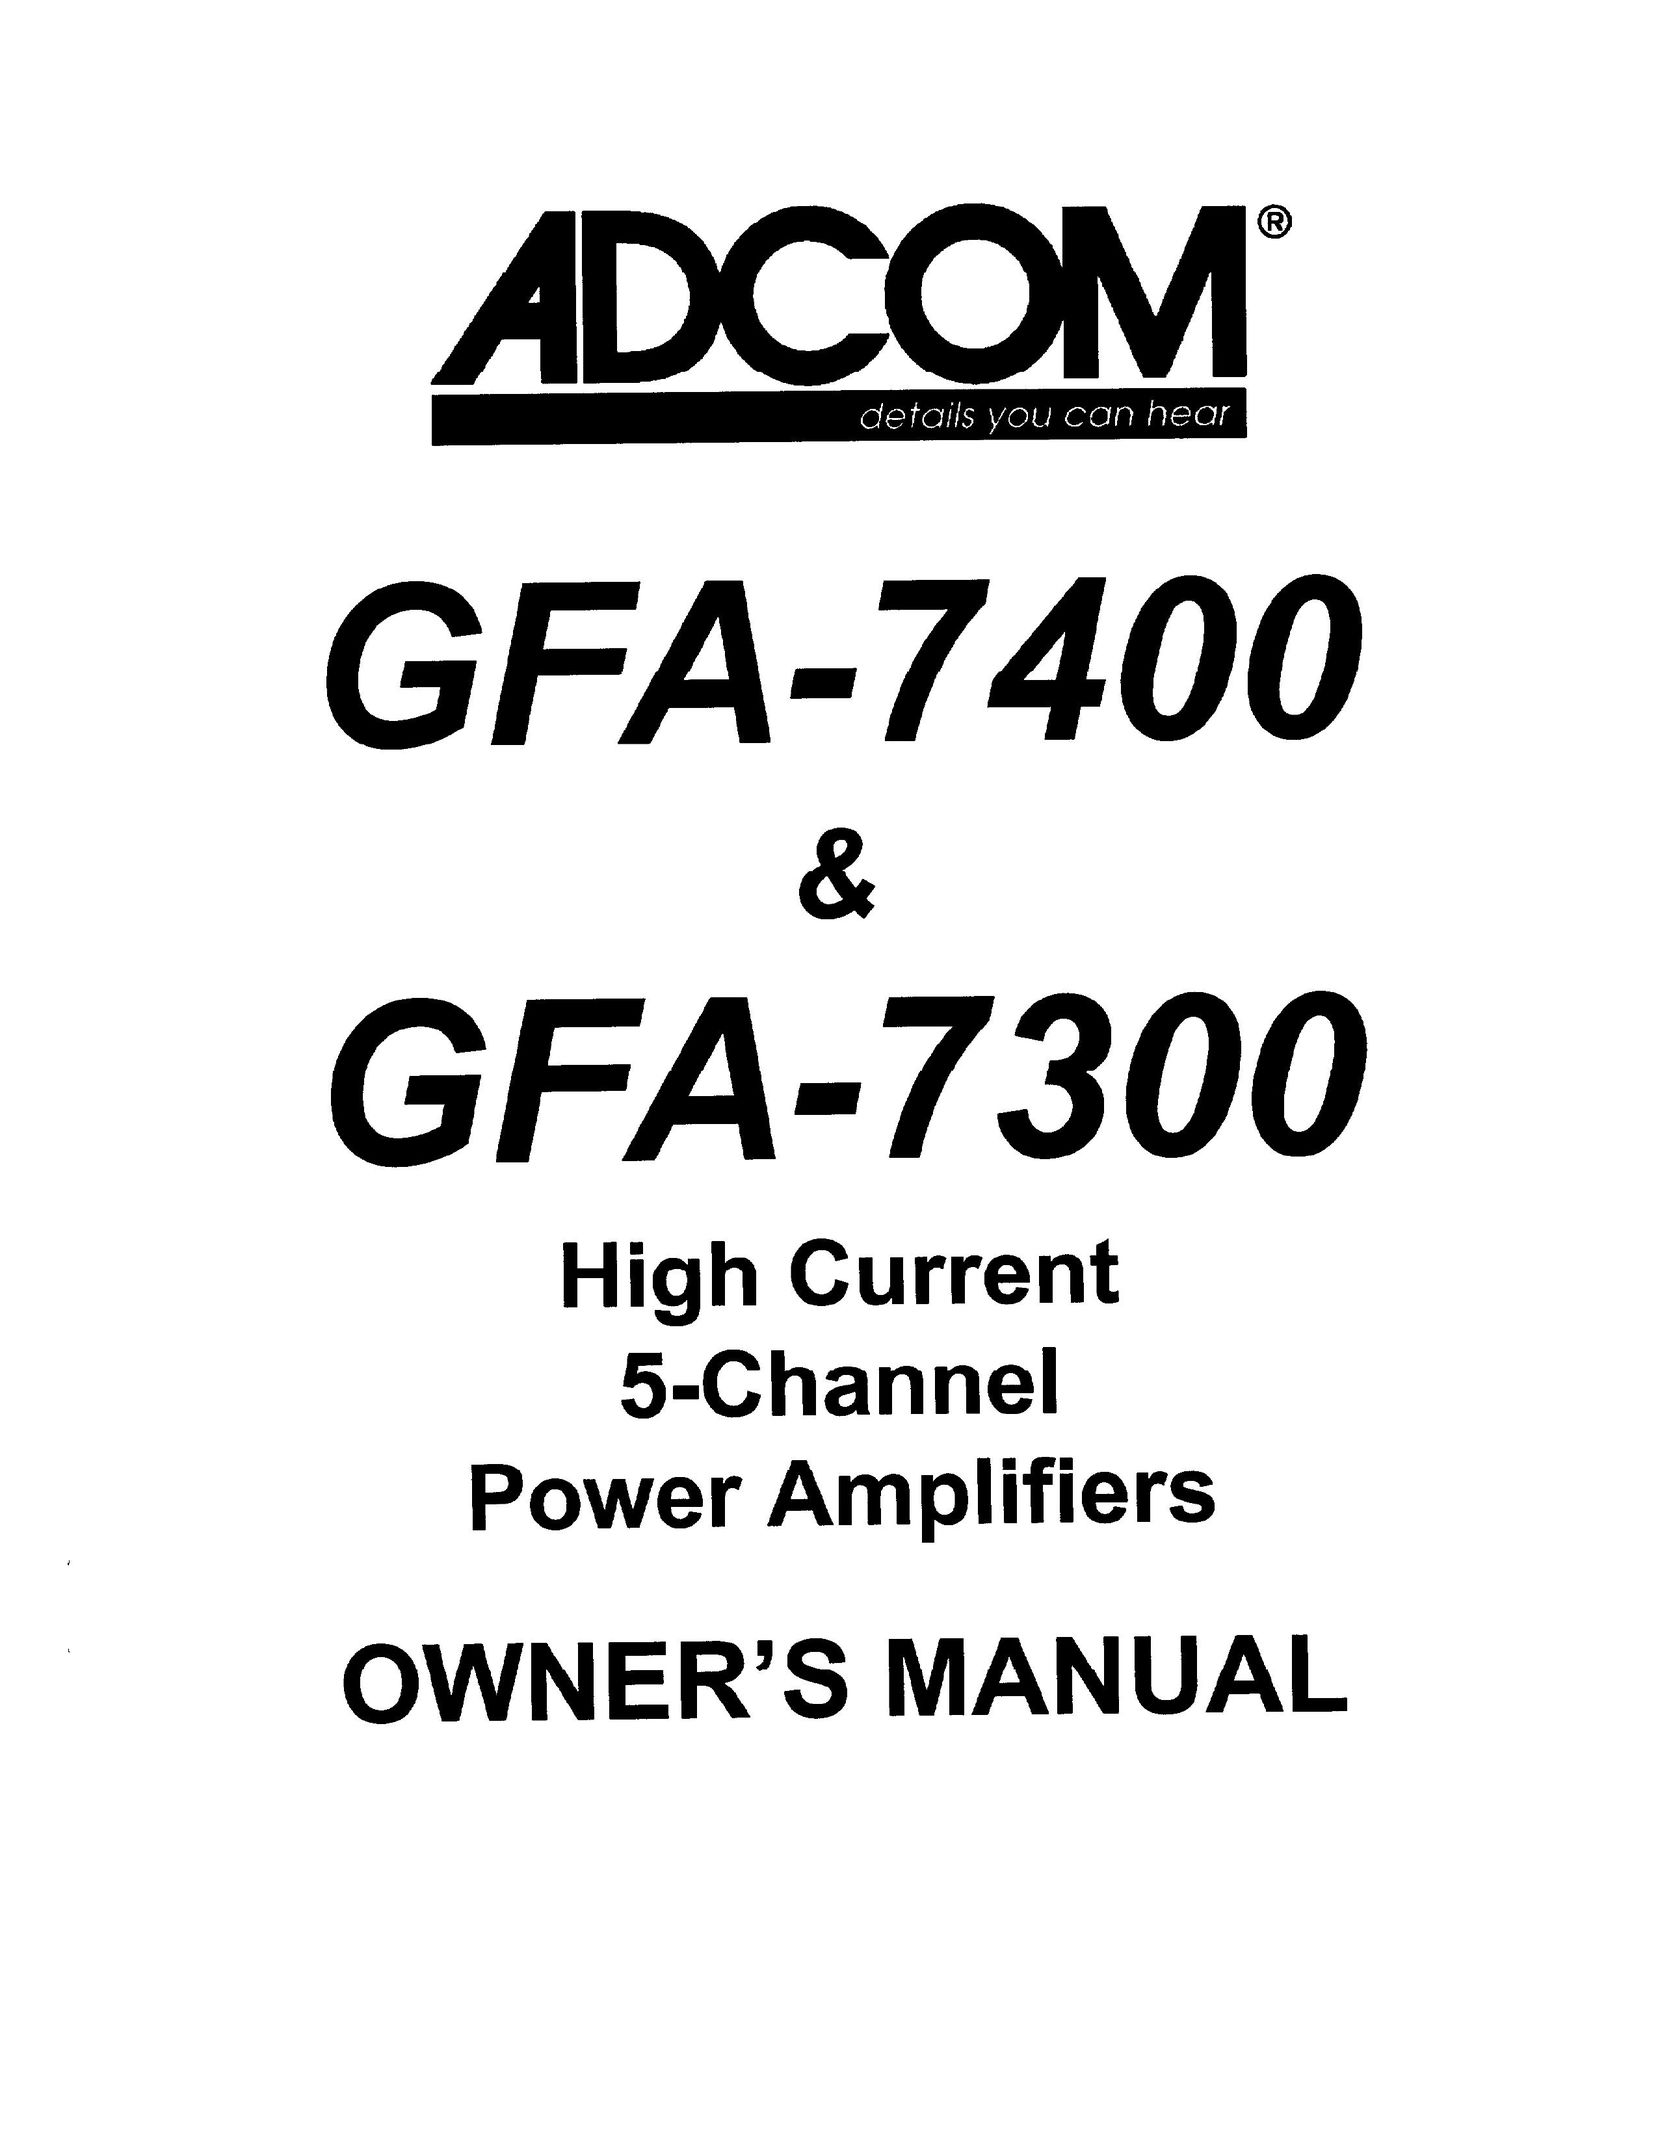 Adcom GFA-7400 Stereo Amplifier User Manual